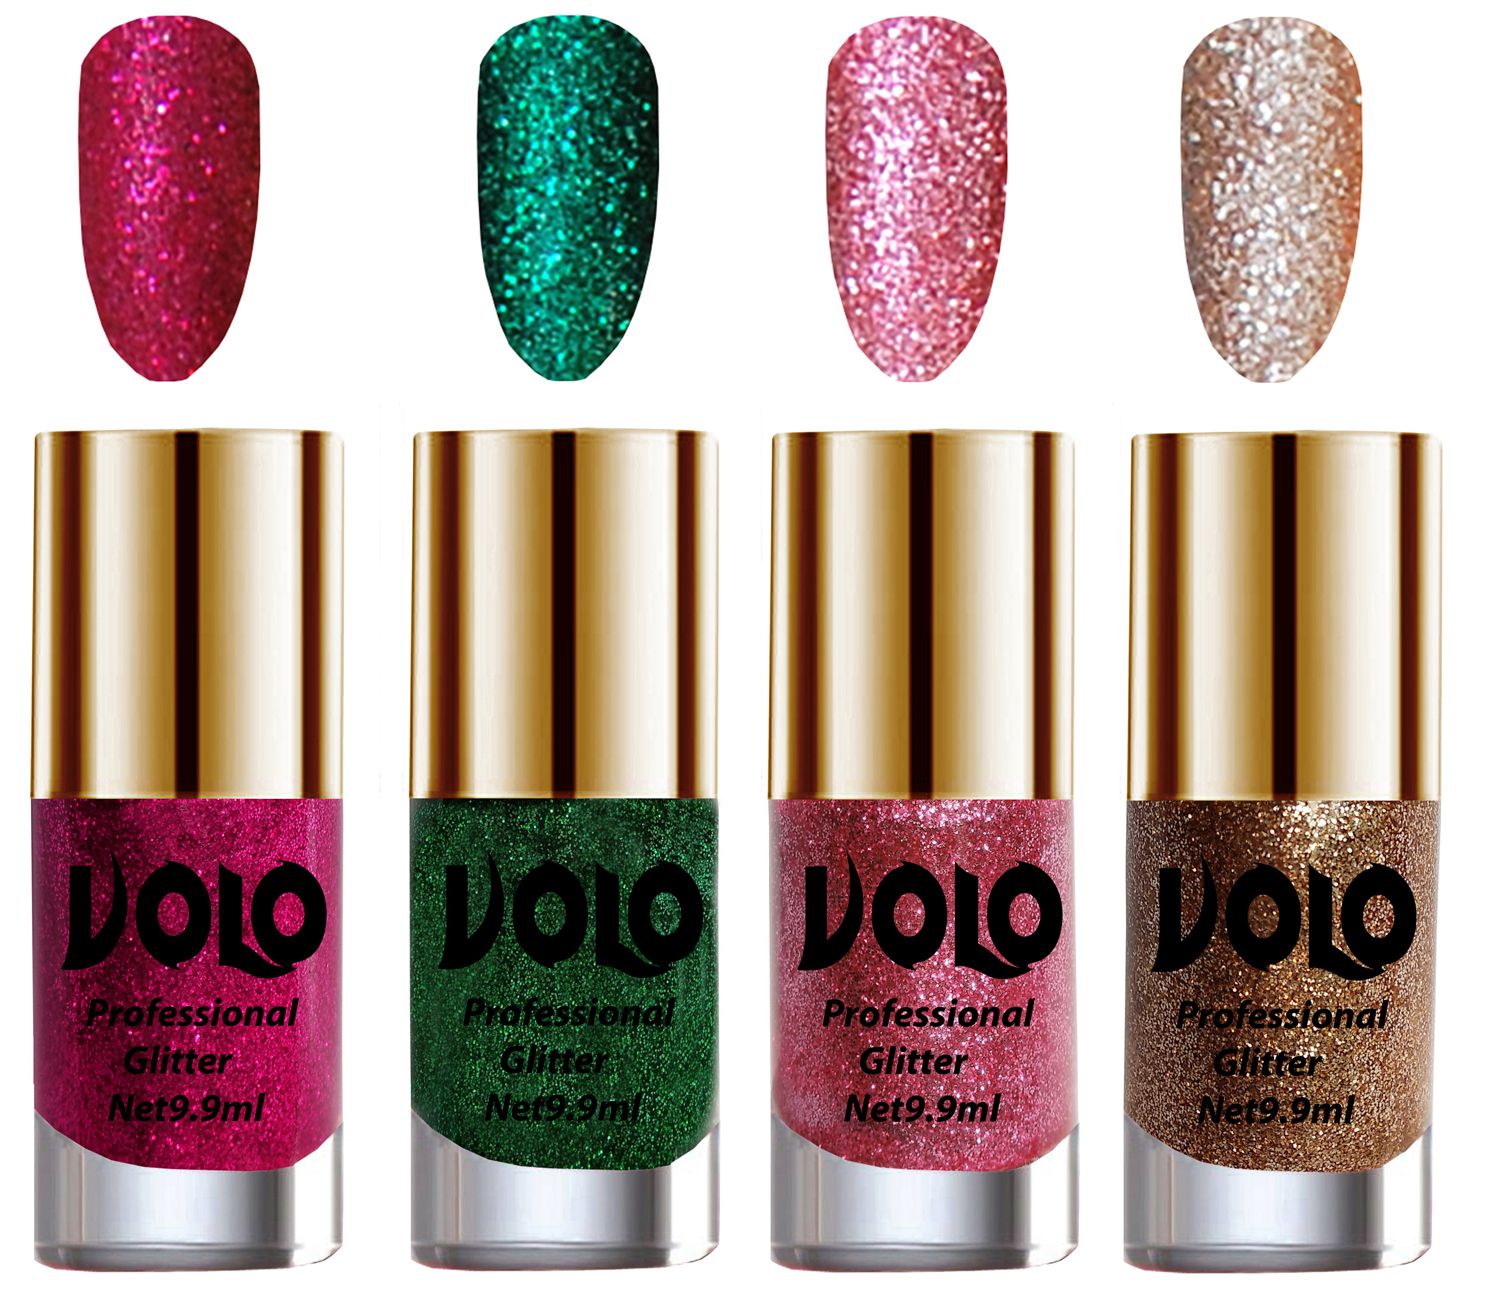     			VOLO Professionally Used Glitter Shine Nail Polish Magenta,Green,Pink Gold Pack of 4 39 mL